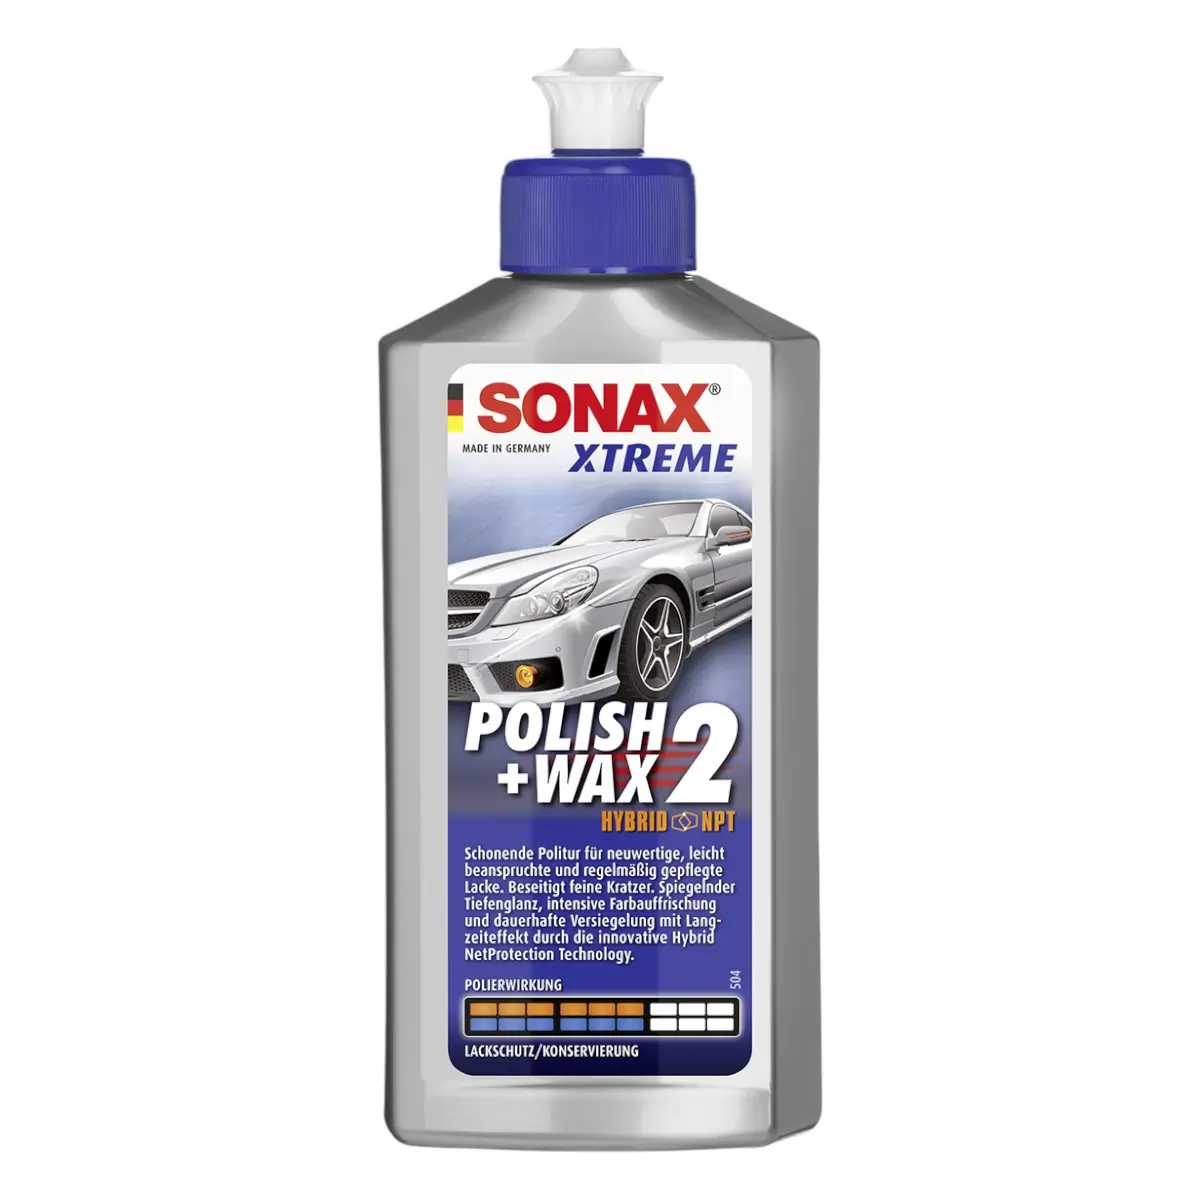 Sonax Xtreme Polish+Wax 2 Hybrid NPT 500ml